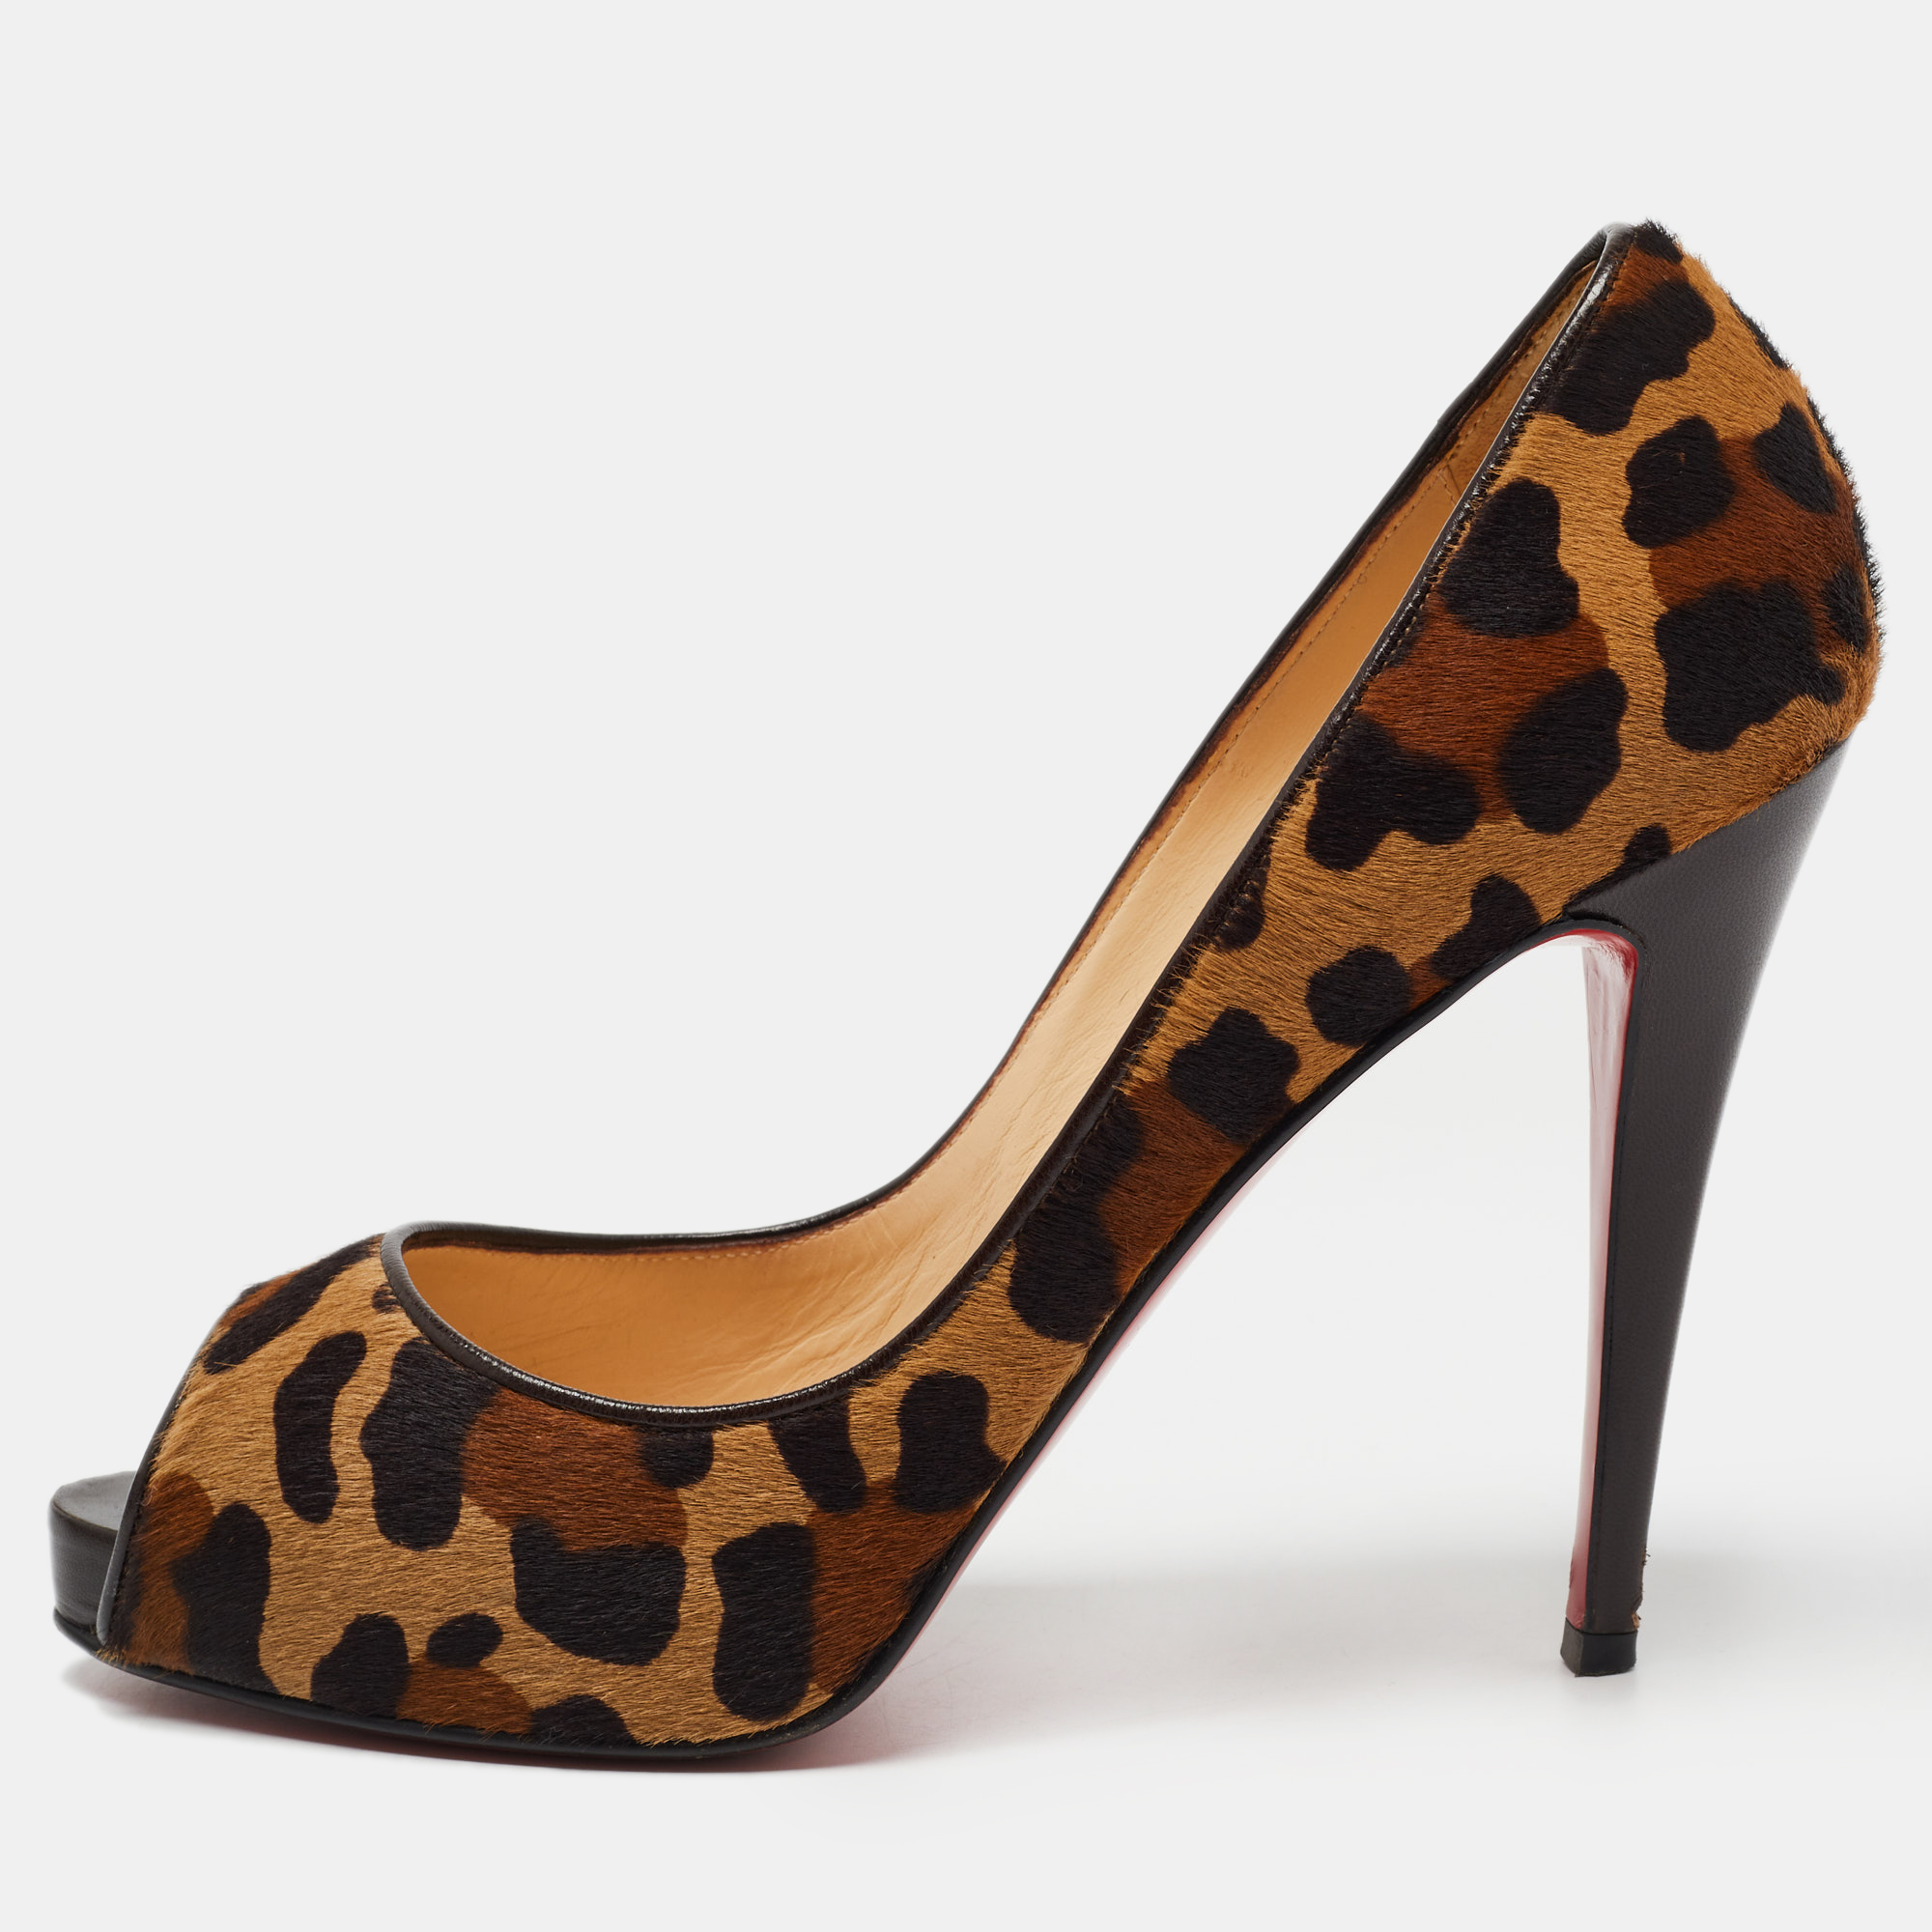 Christian louboutin brown leopard print calf hair very prive peep toe pumps size 40.5